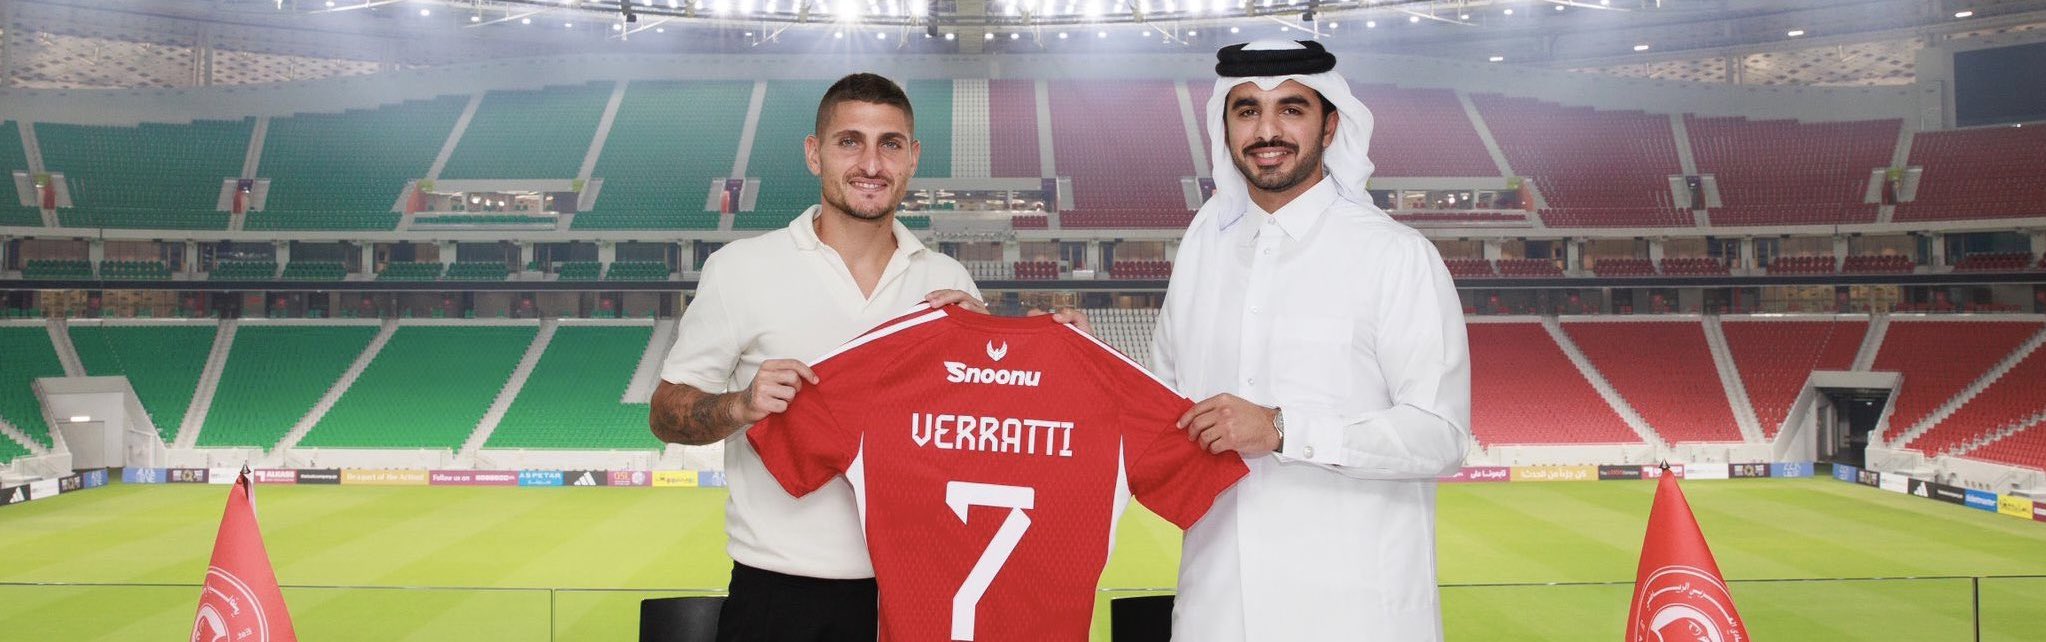 Marco Verratti Tinggalkan PSG dan Gabung Klub Qatar Al-Arabi